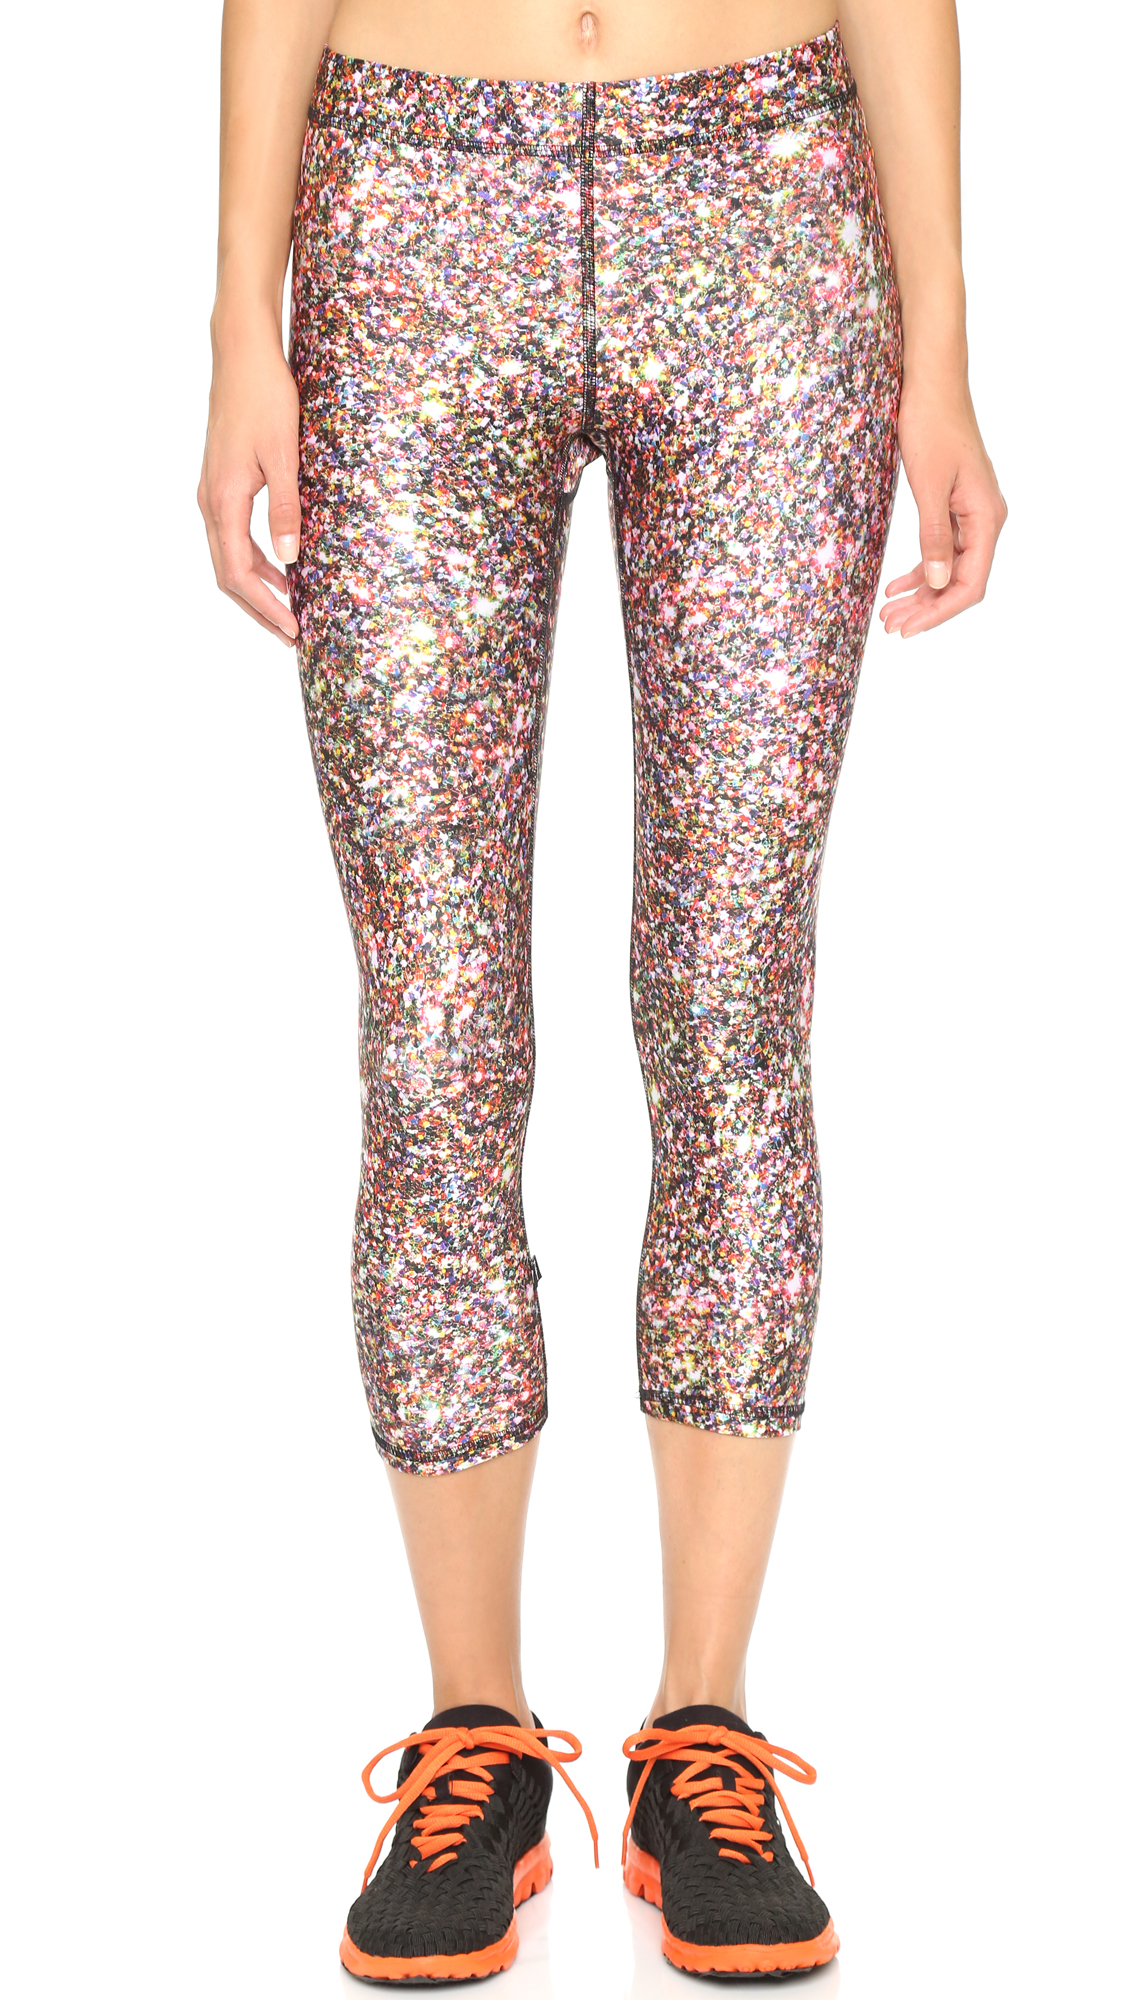 target glitter sparkle tights